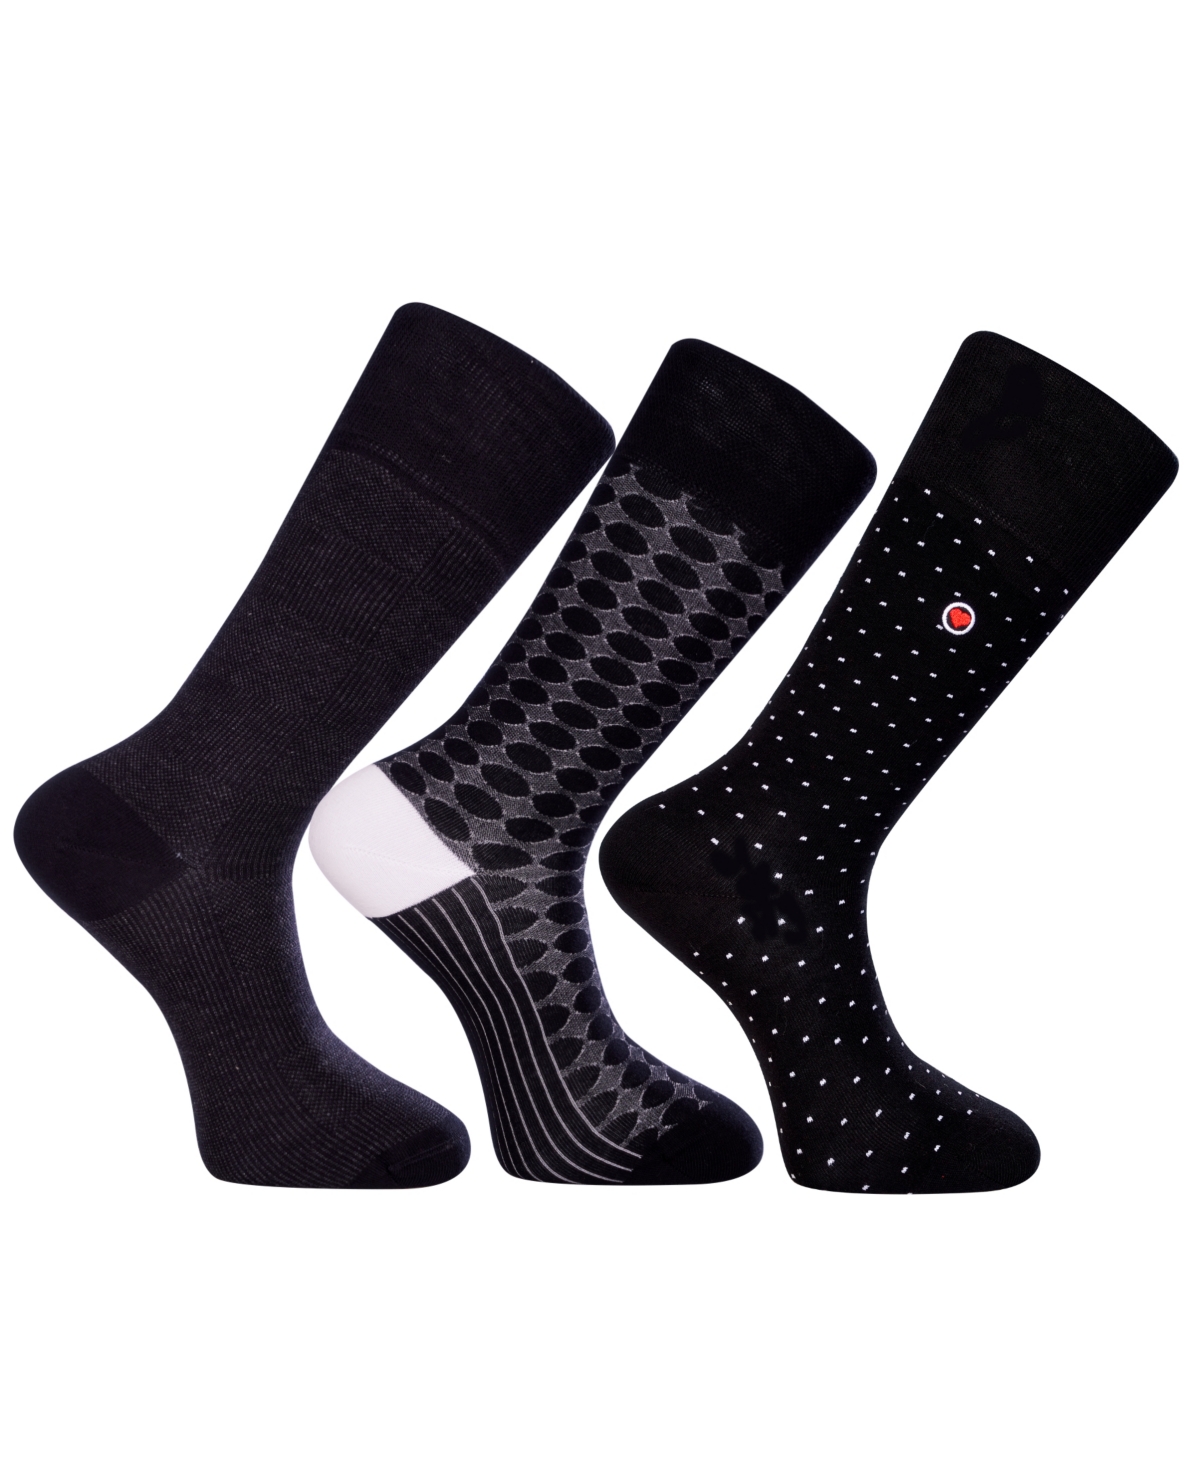 Love Sock Company Men's Vegas Bundle Luxury Mid-calf Dress Socks With Seamless Toe Design, Pack Of 3 In Multi Color